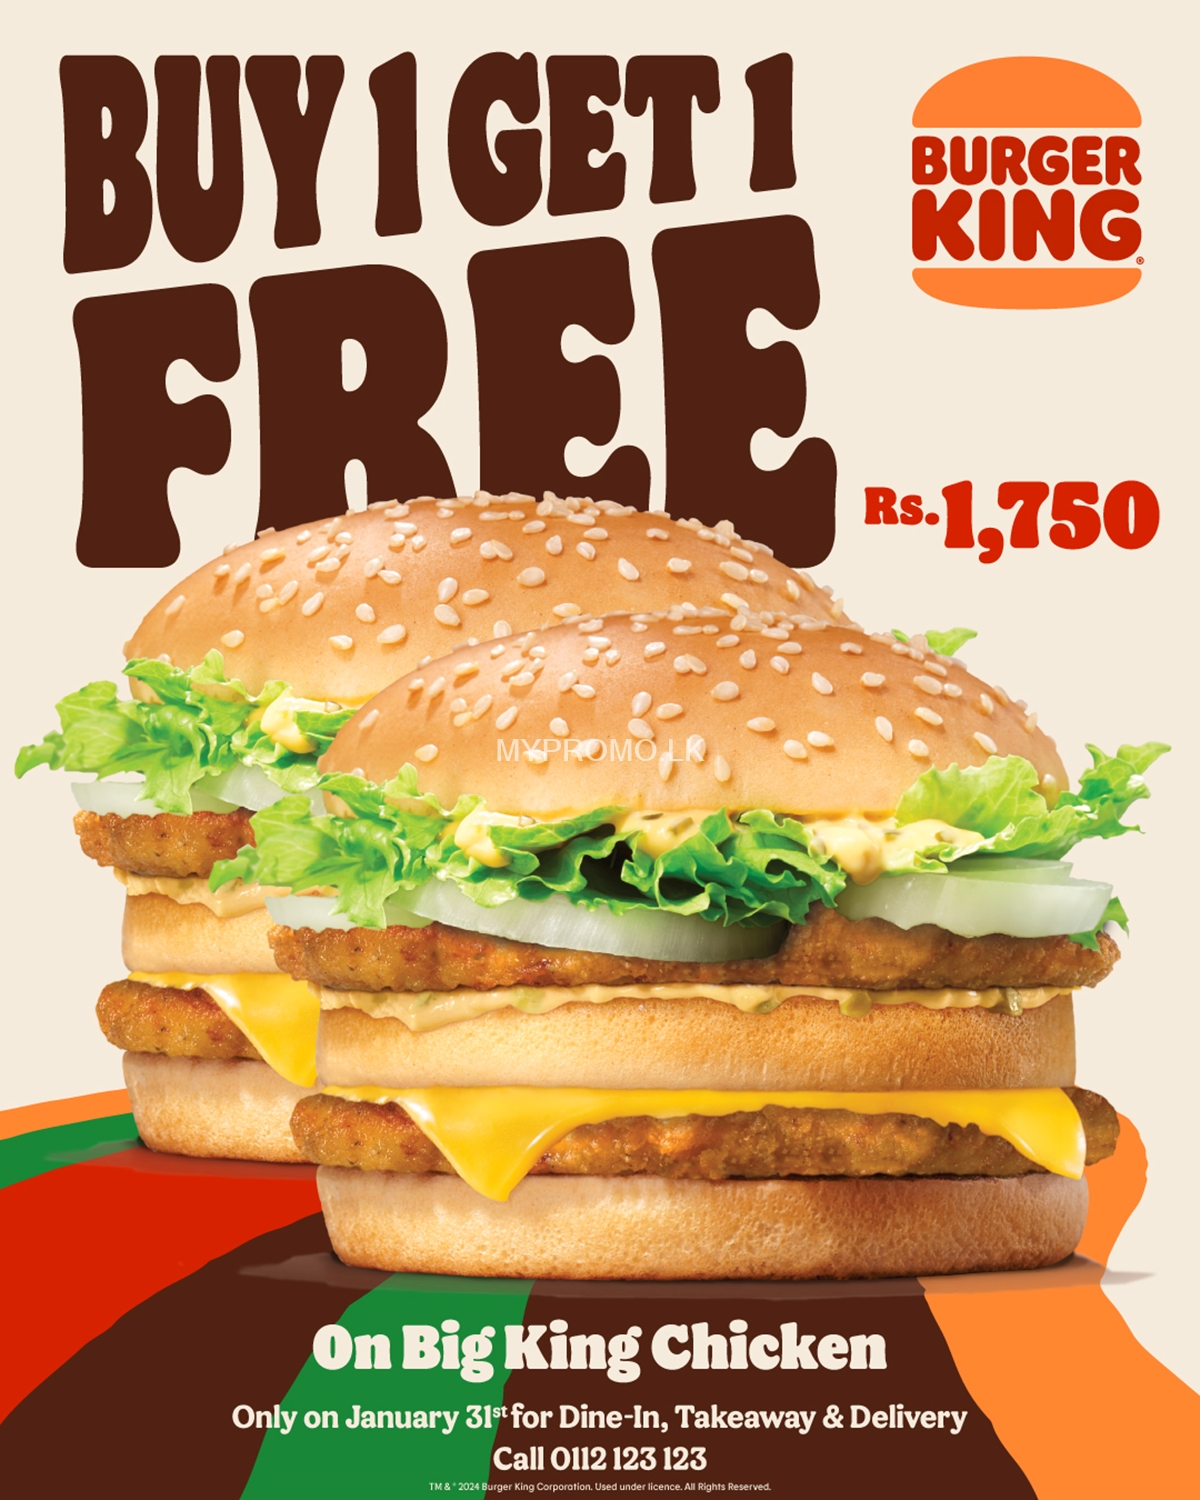 Buy 1 Get 1 Free at Burger King